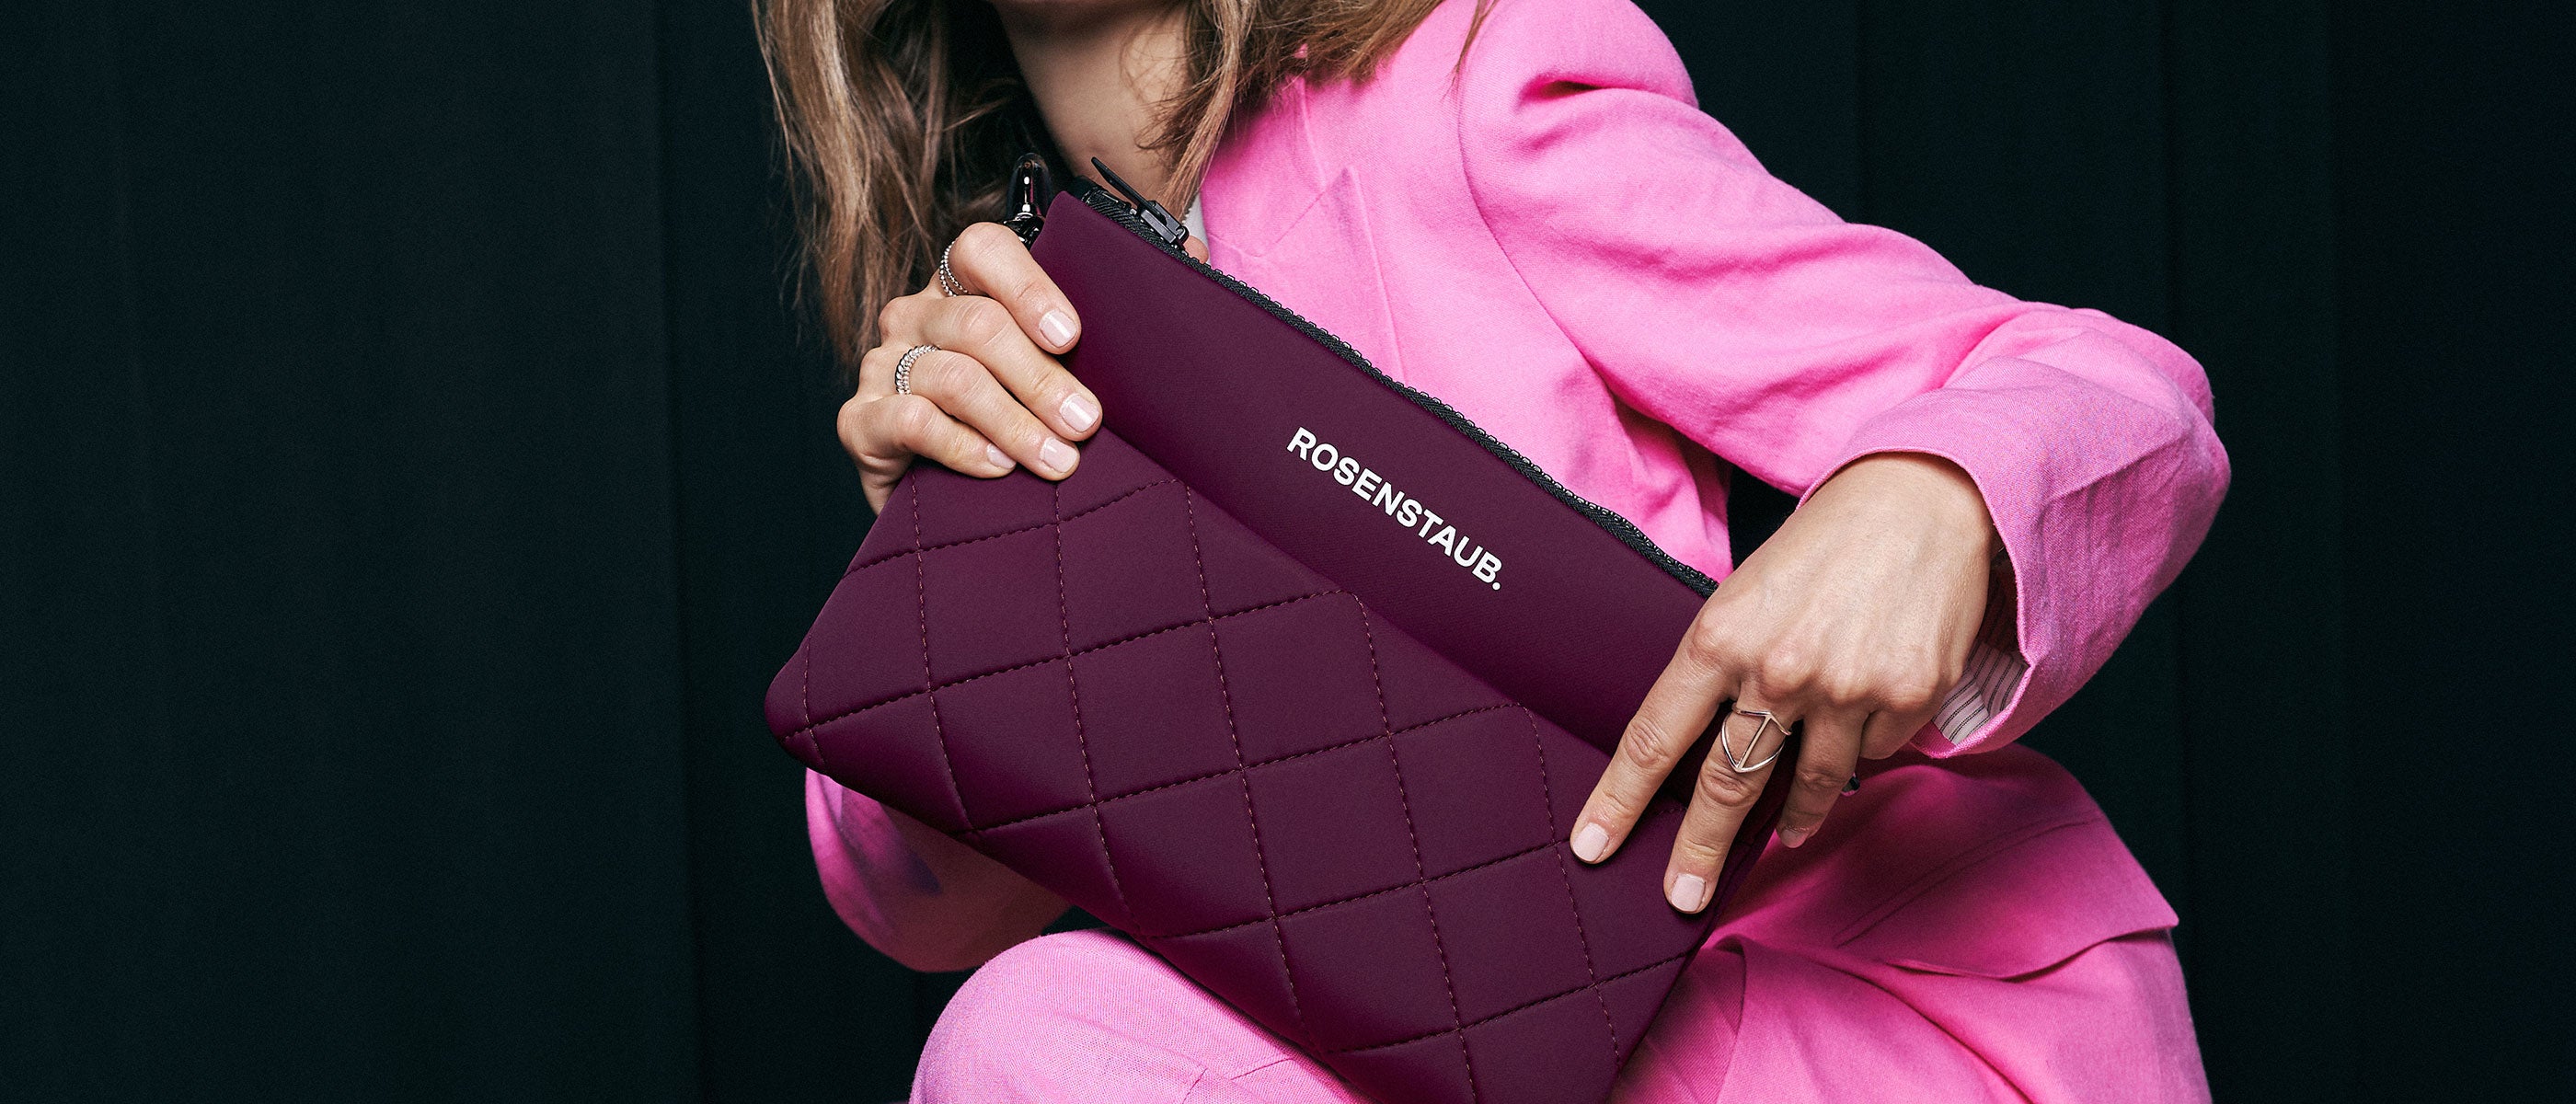 Burgundy Crossbody Bag on Model with Pink Suit - by Rosenstaub